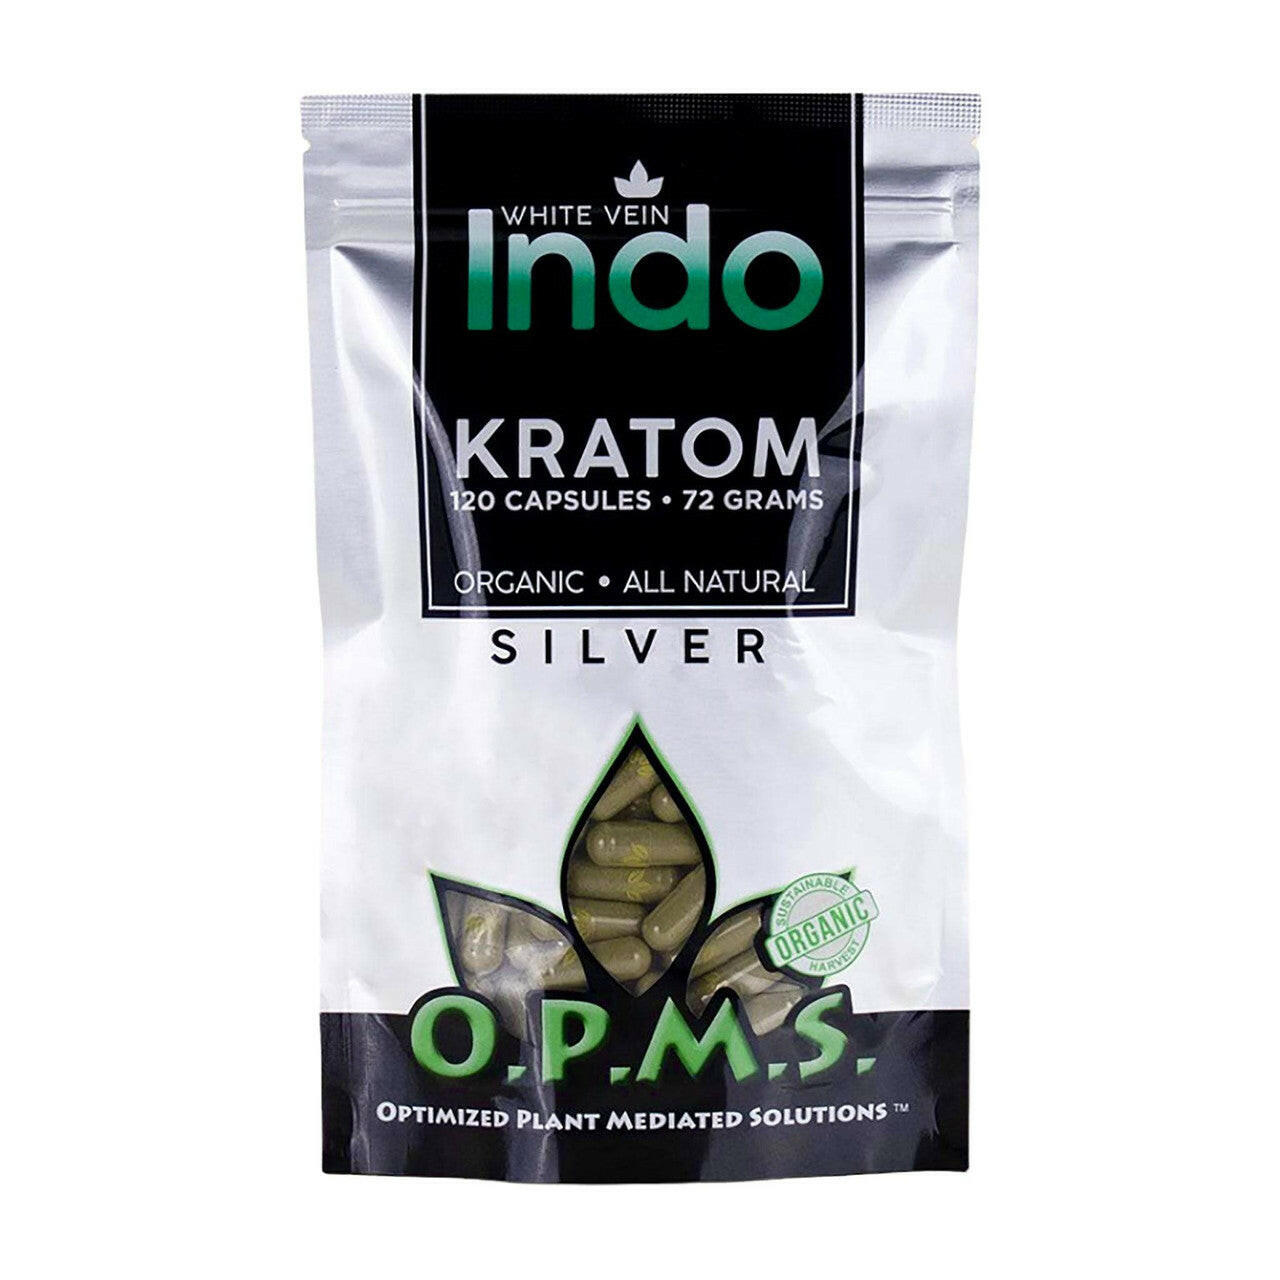 O.P.M.S.® Silver Kratom Capsules – White Vein - INDO